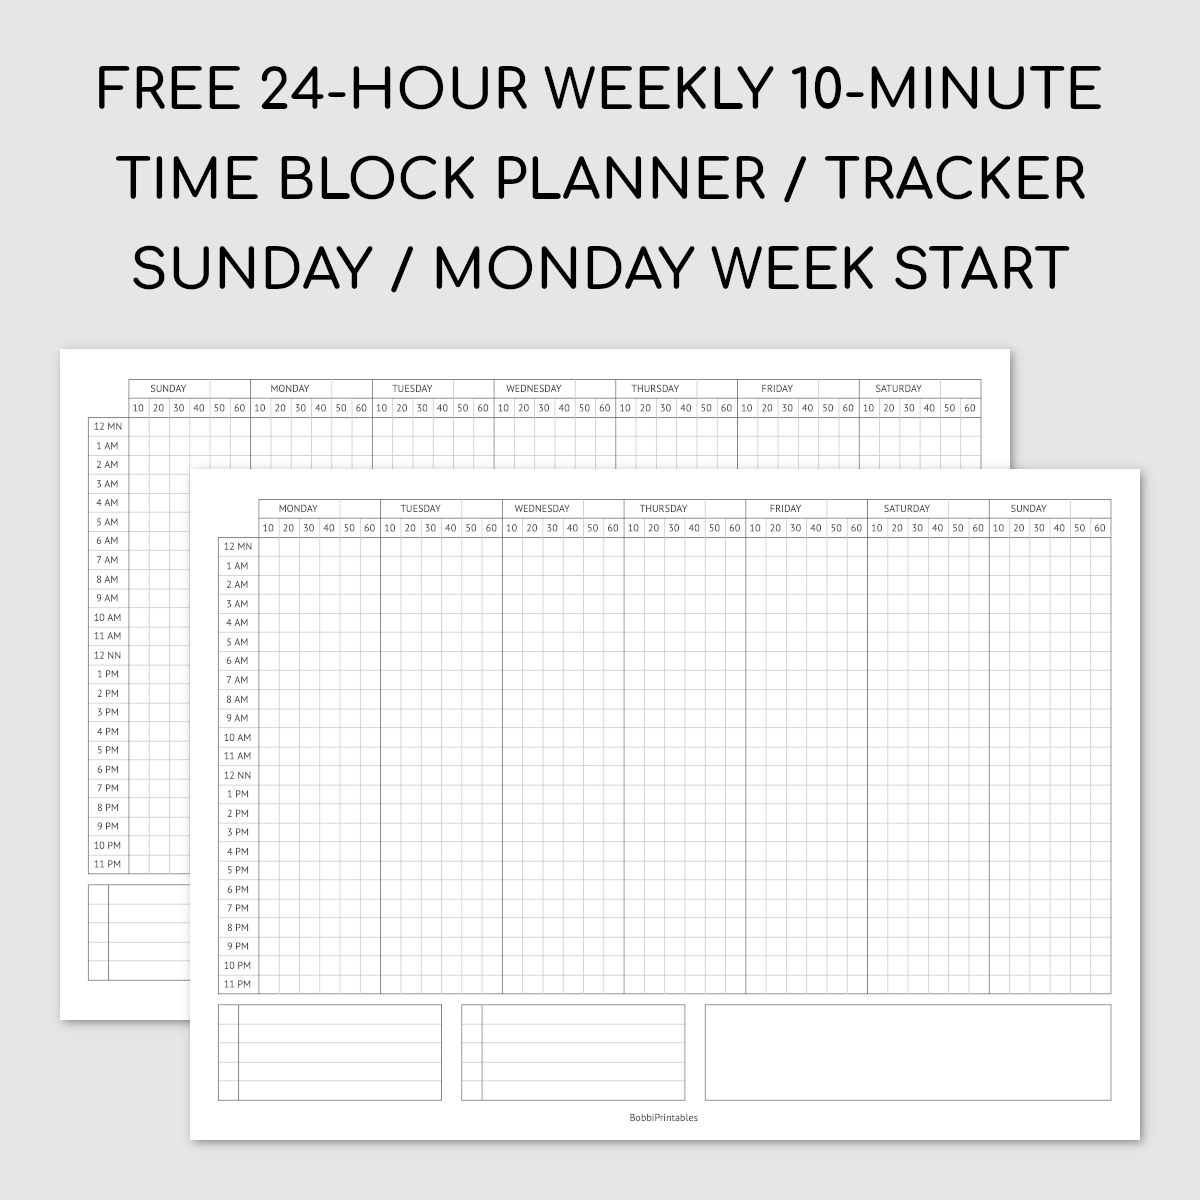 printable-24-hour-weekly-10-minute-time-block-planner-tracker